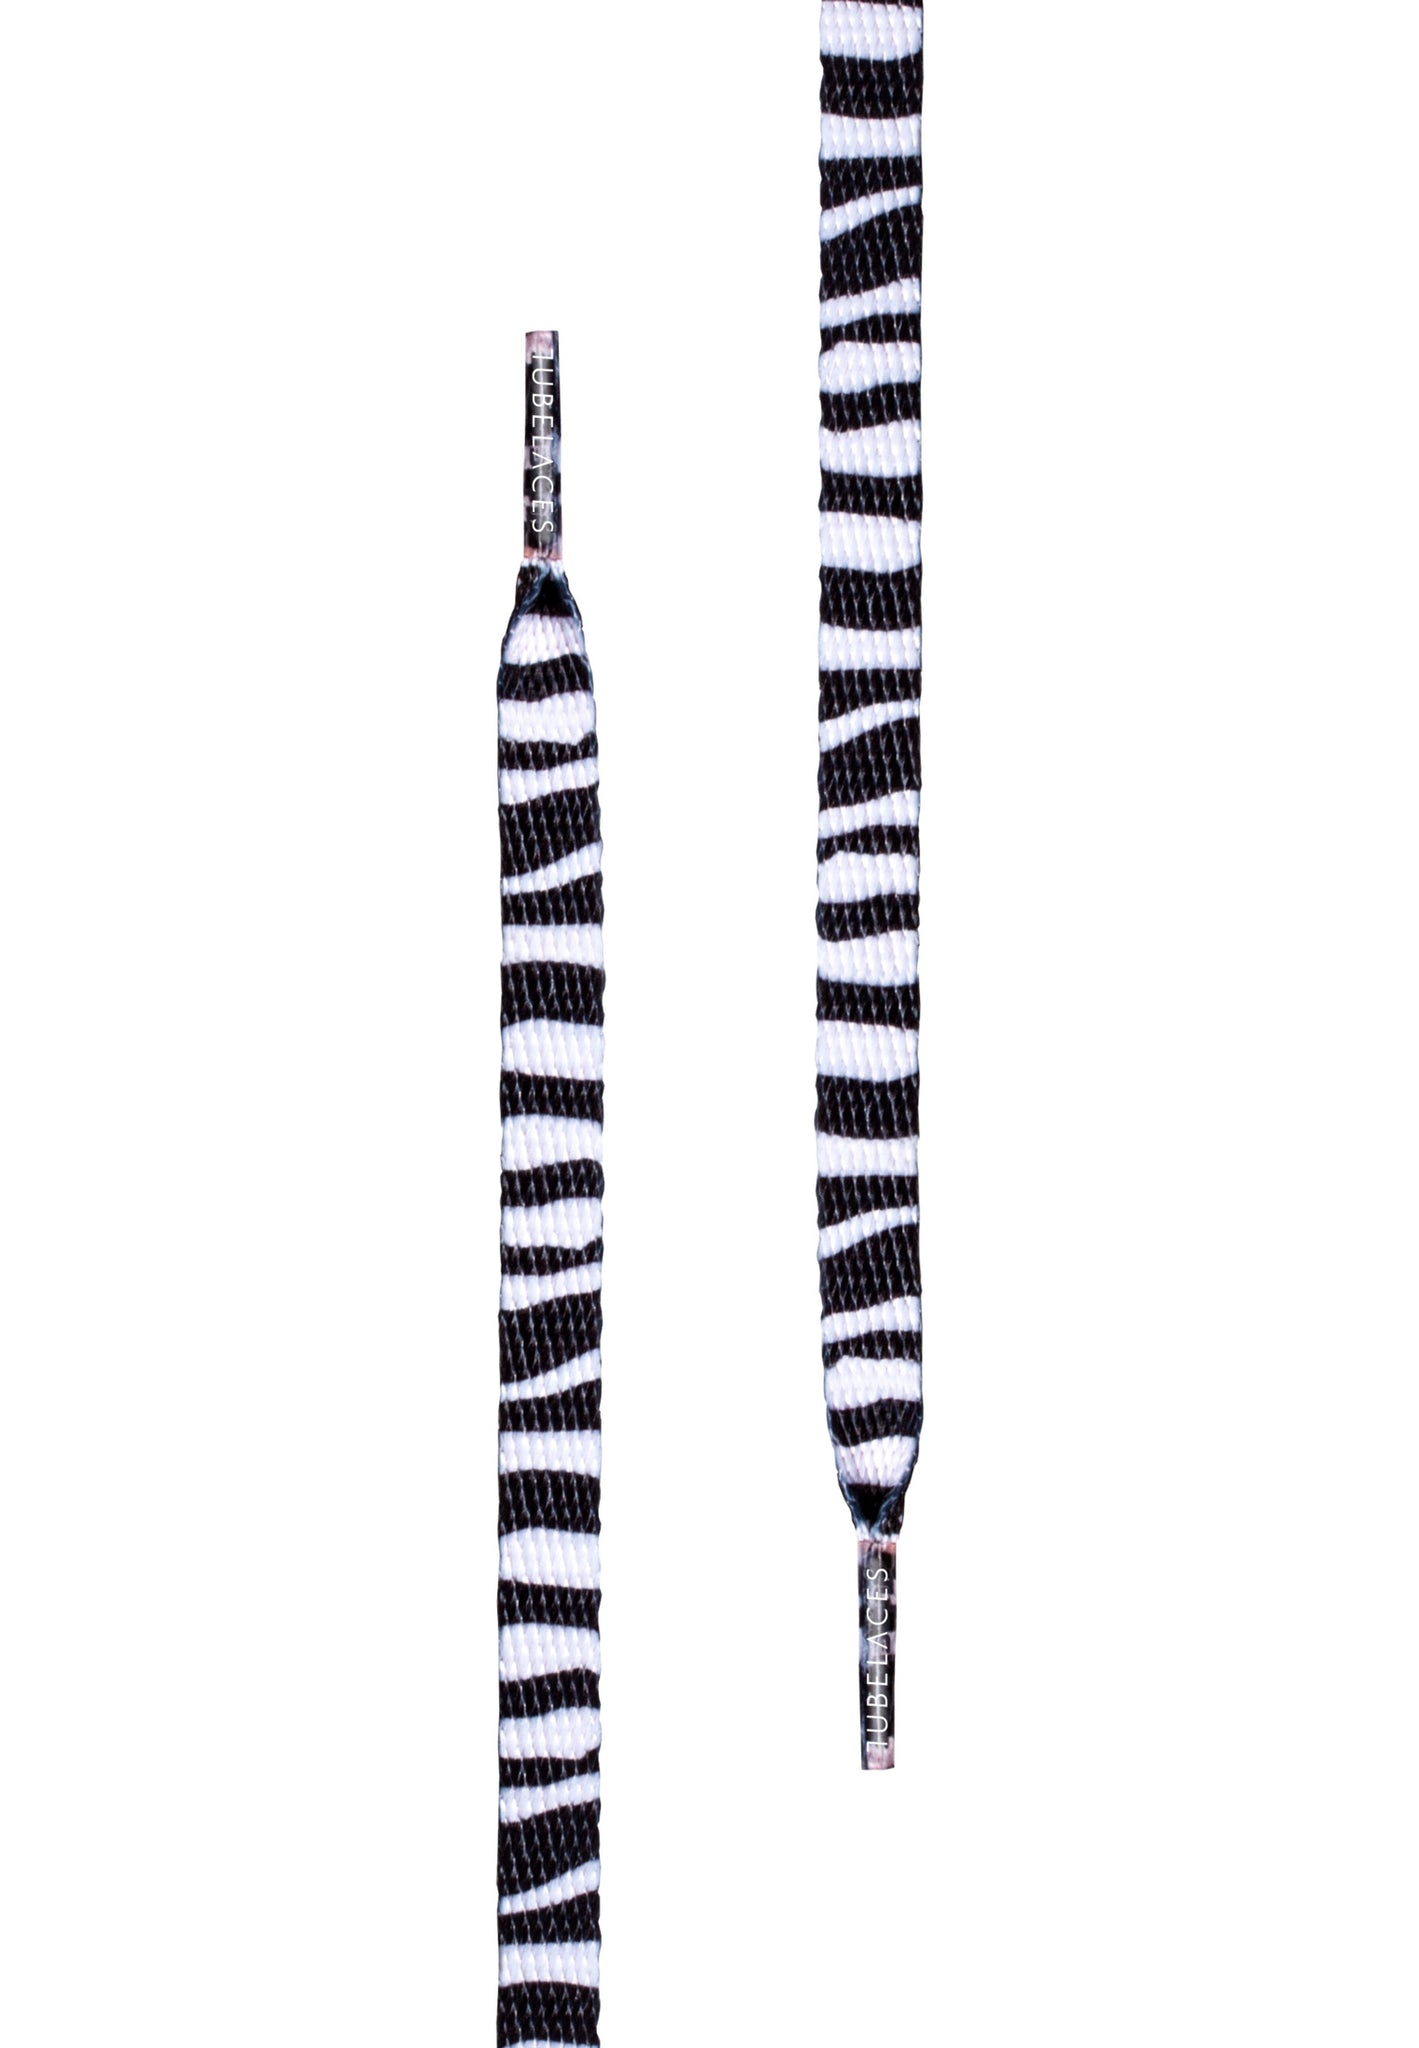 Spezielles flaches Zebra 140cm